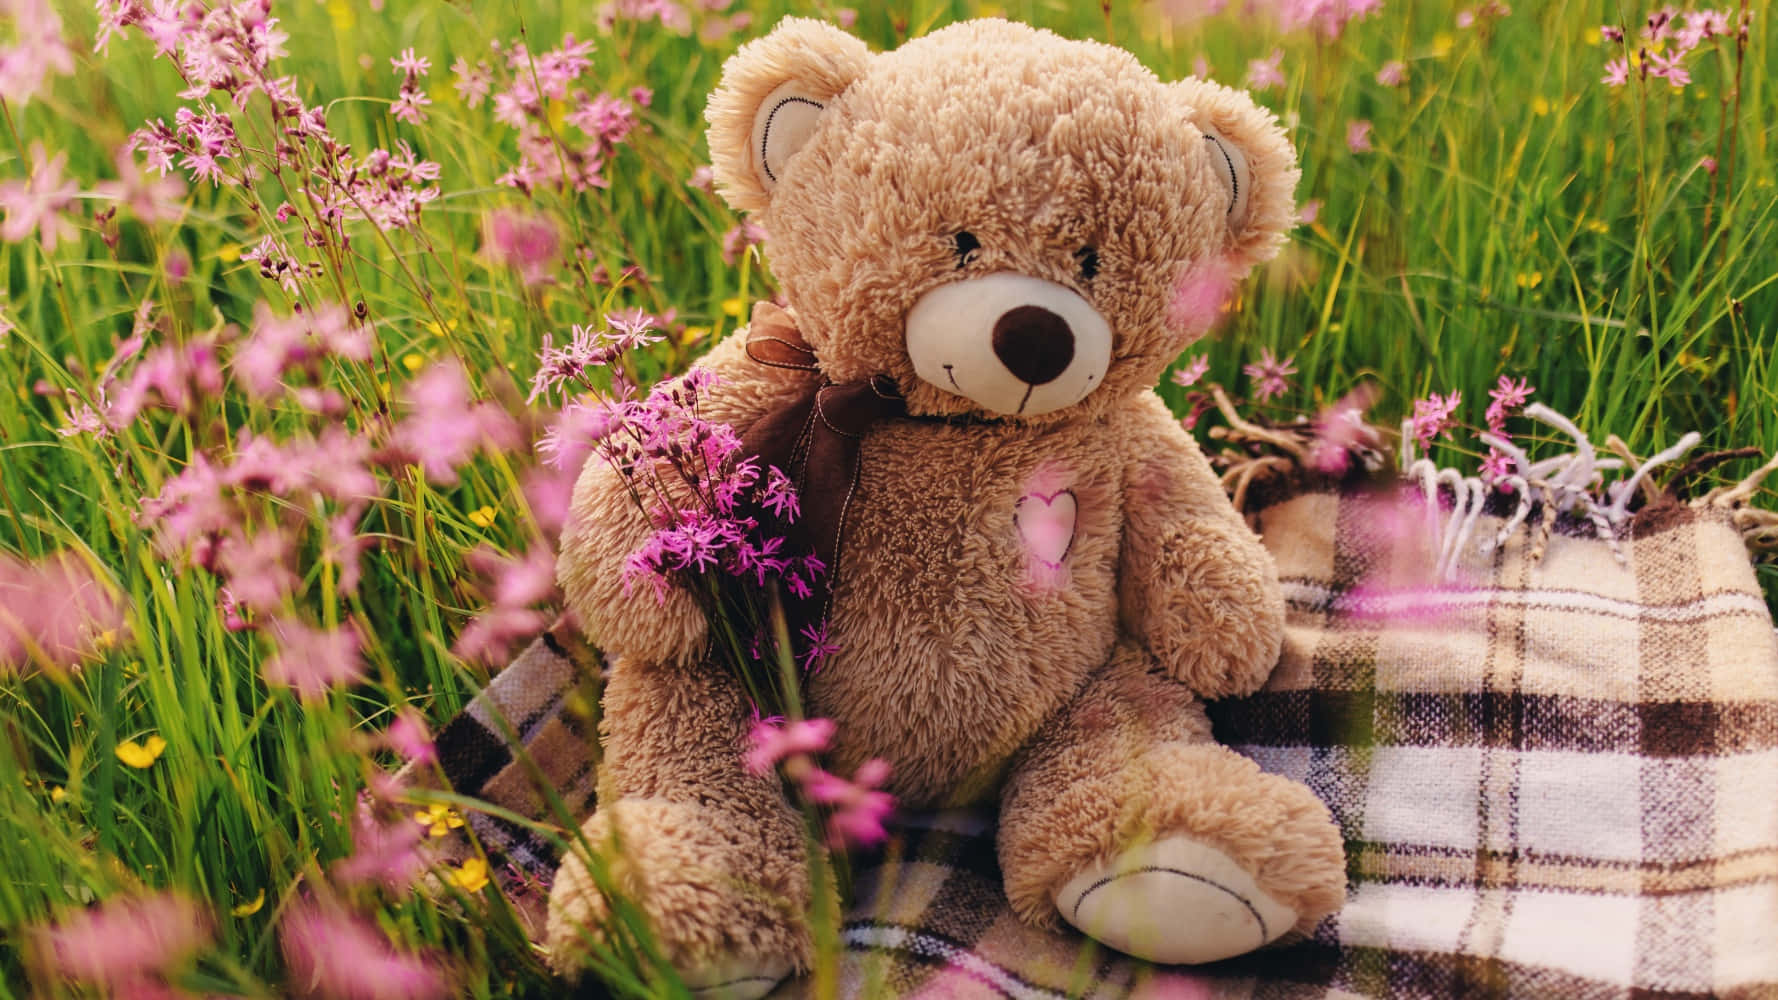 A Teddy Bear Sitting On A Blanket In A Field